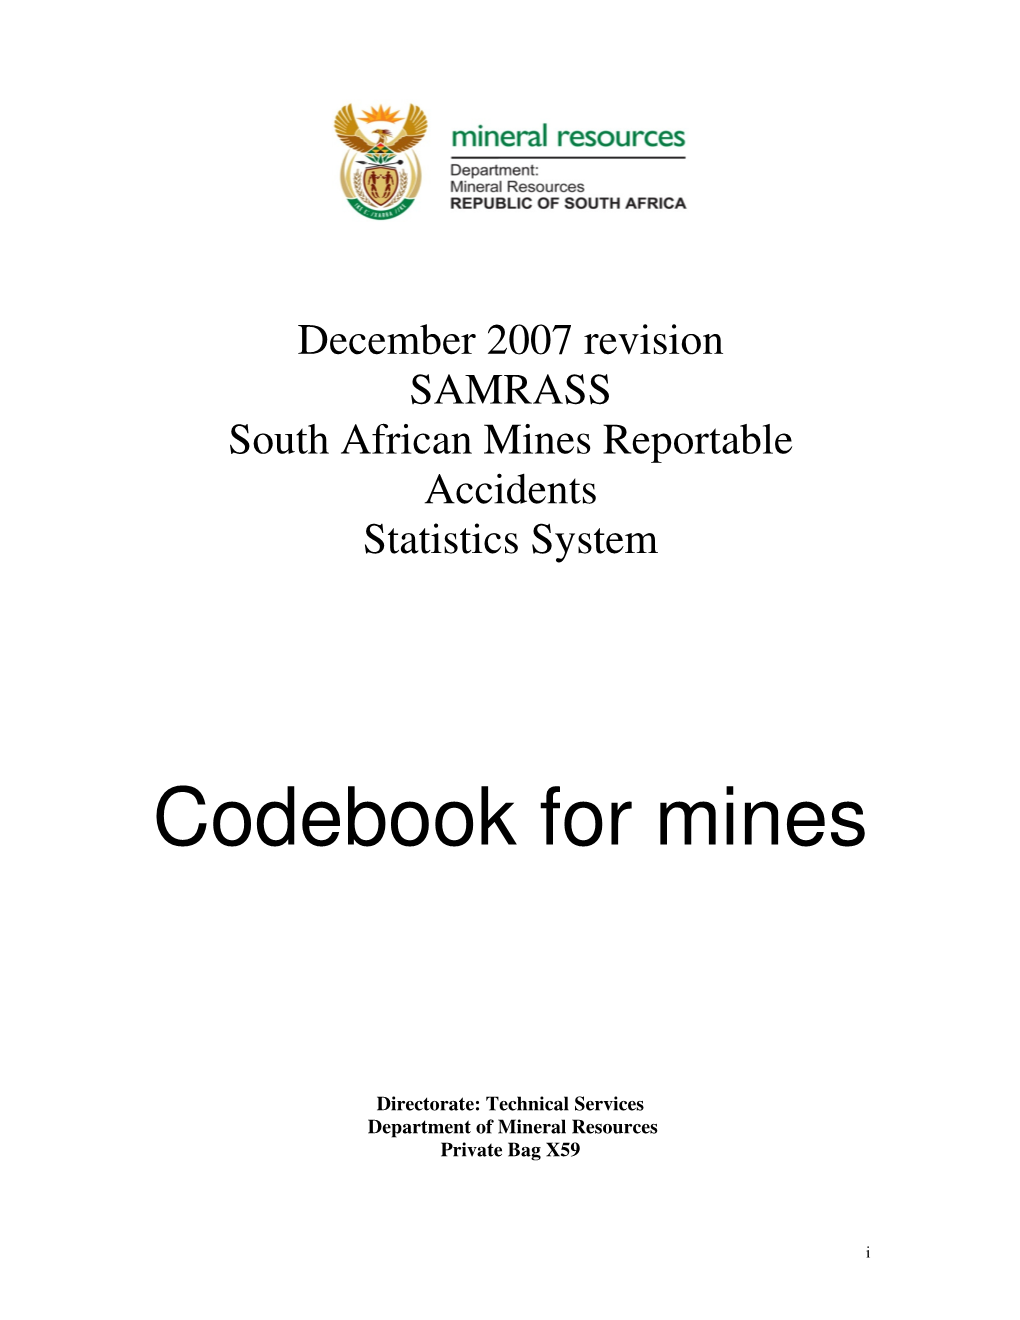 SAMRASS Code Book for Mines